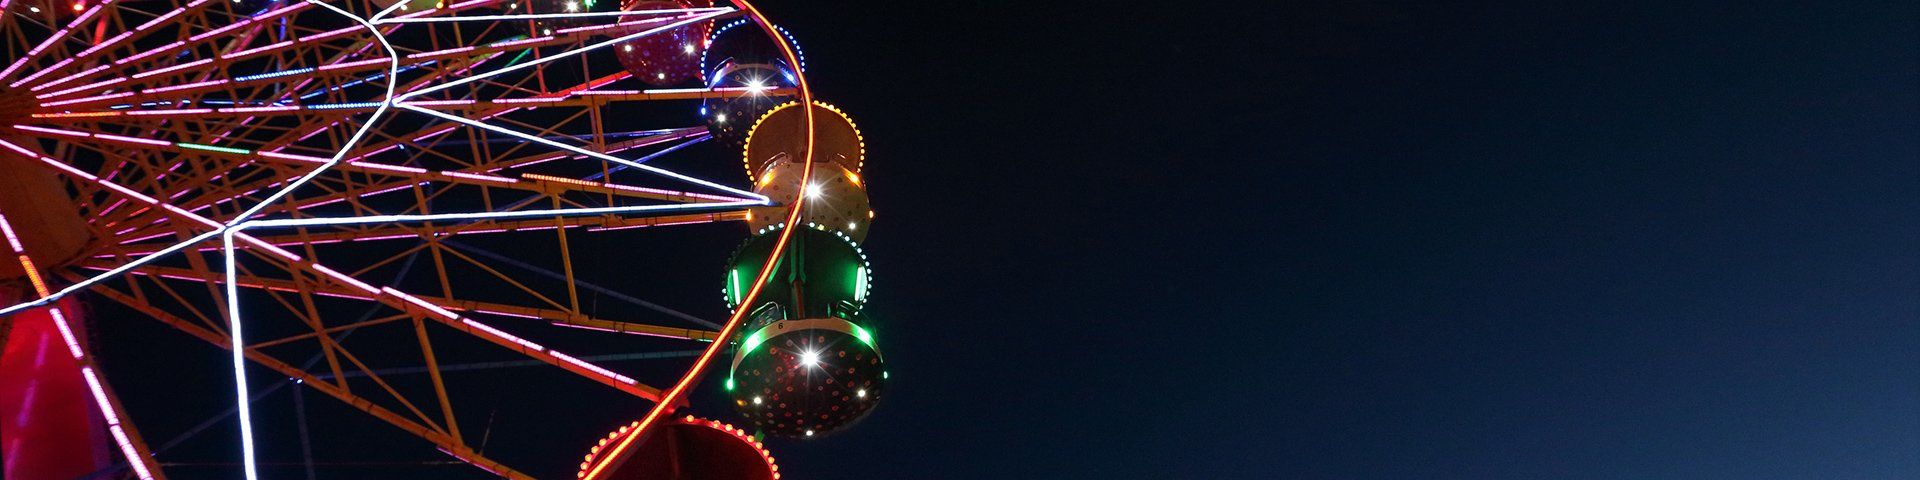 A ferris wheel illuminated against the night sky